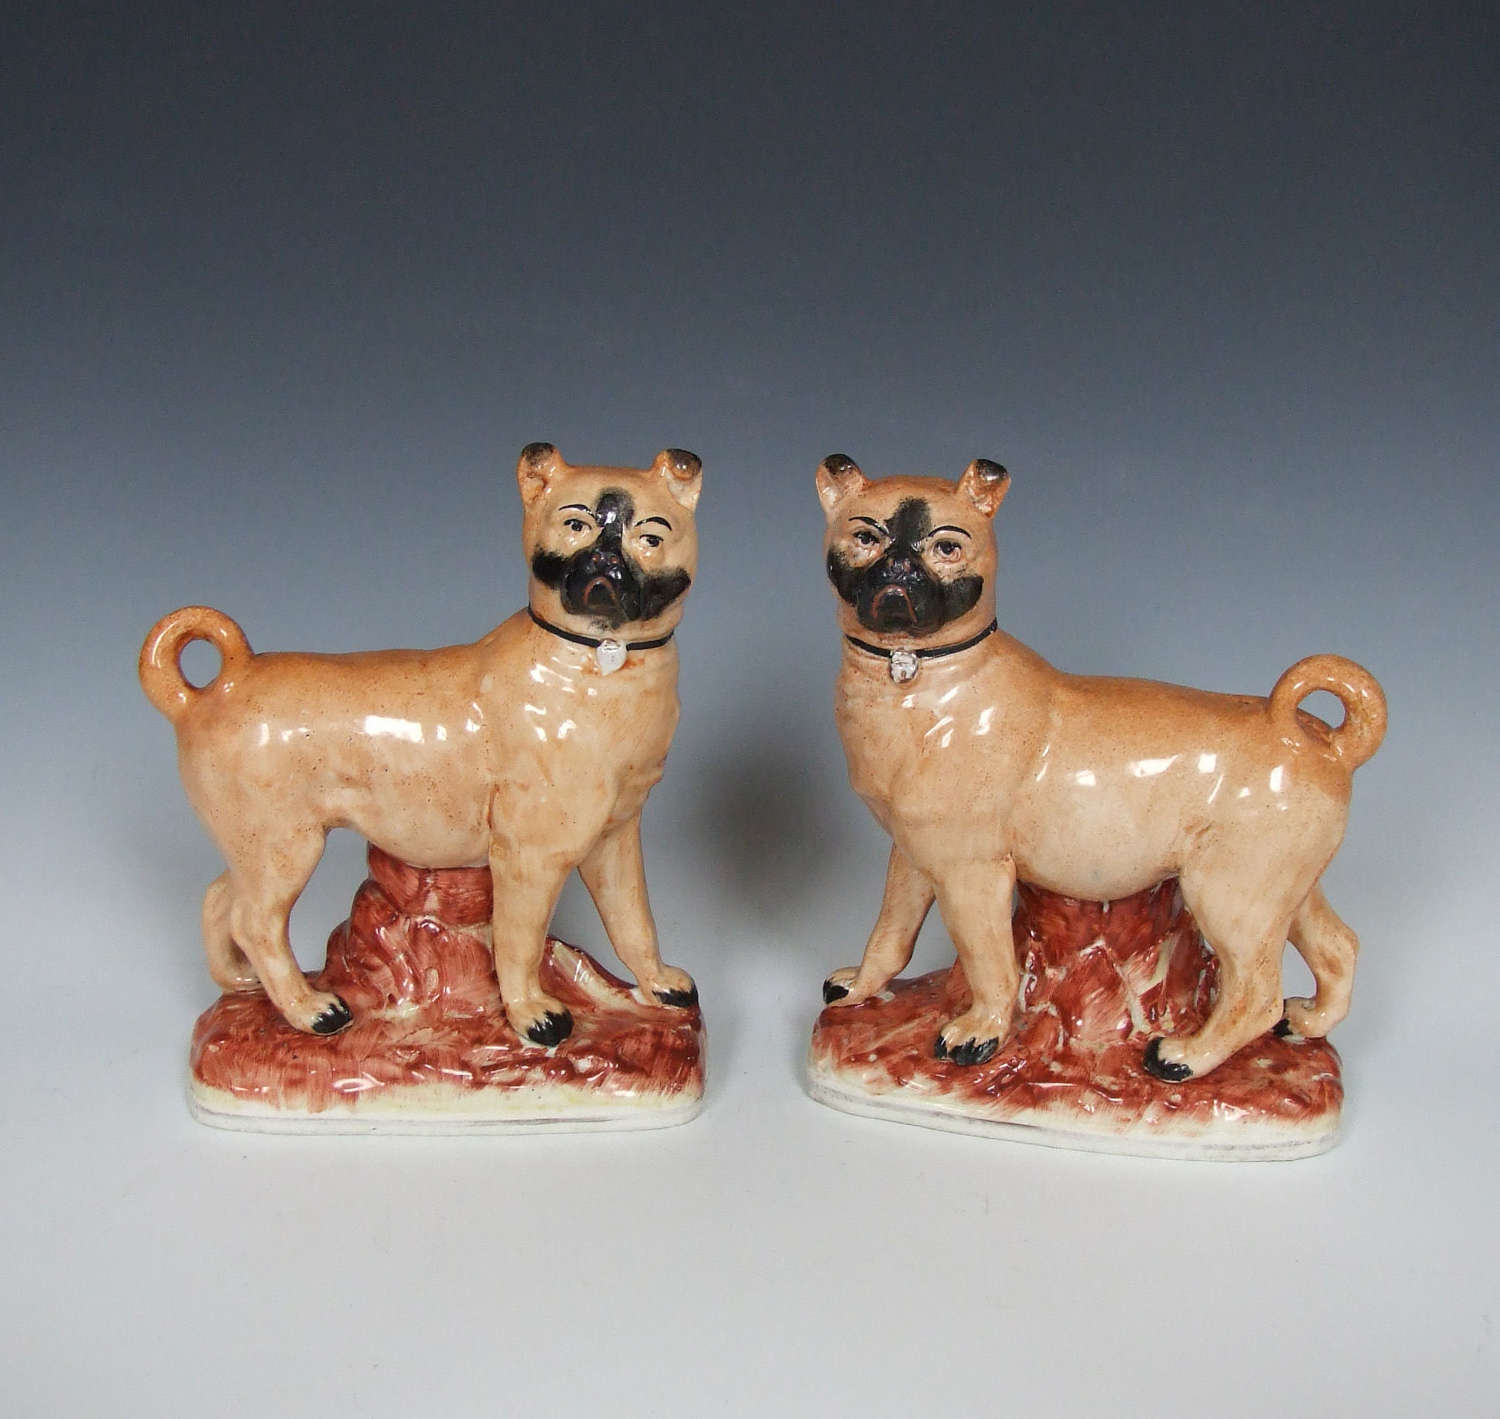 Rare pair of Staffordshire standing pug figures